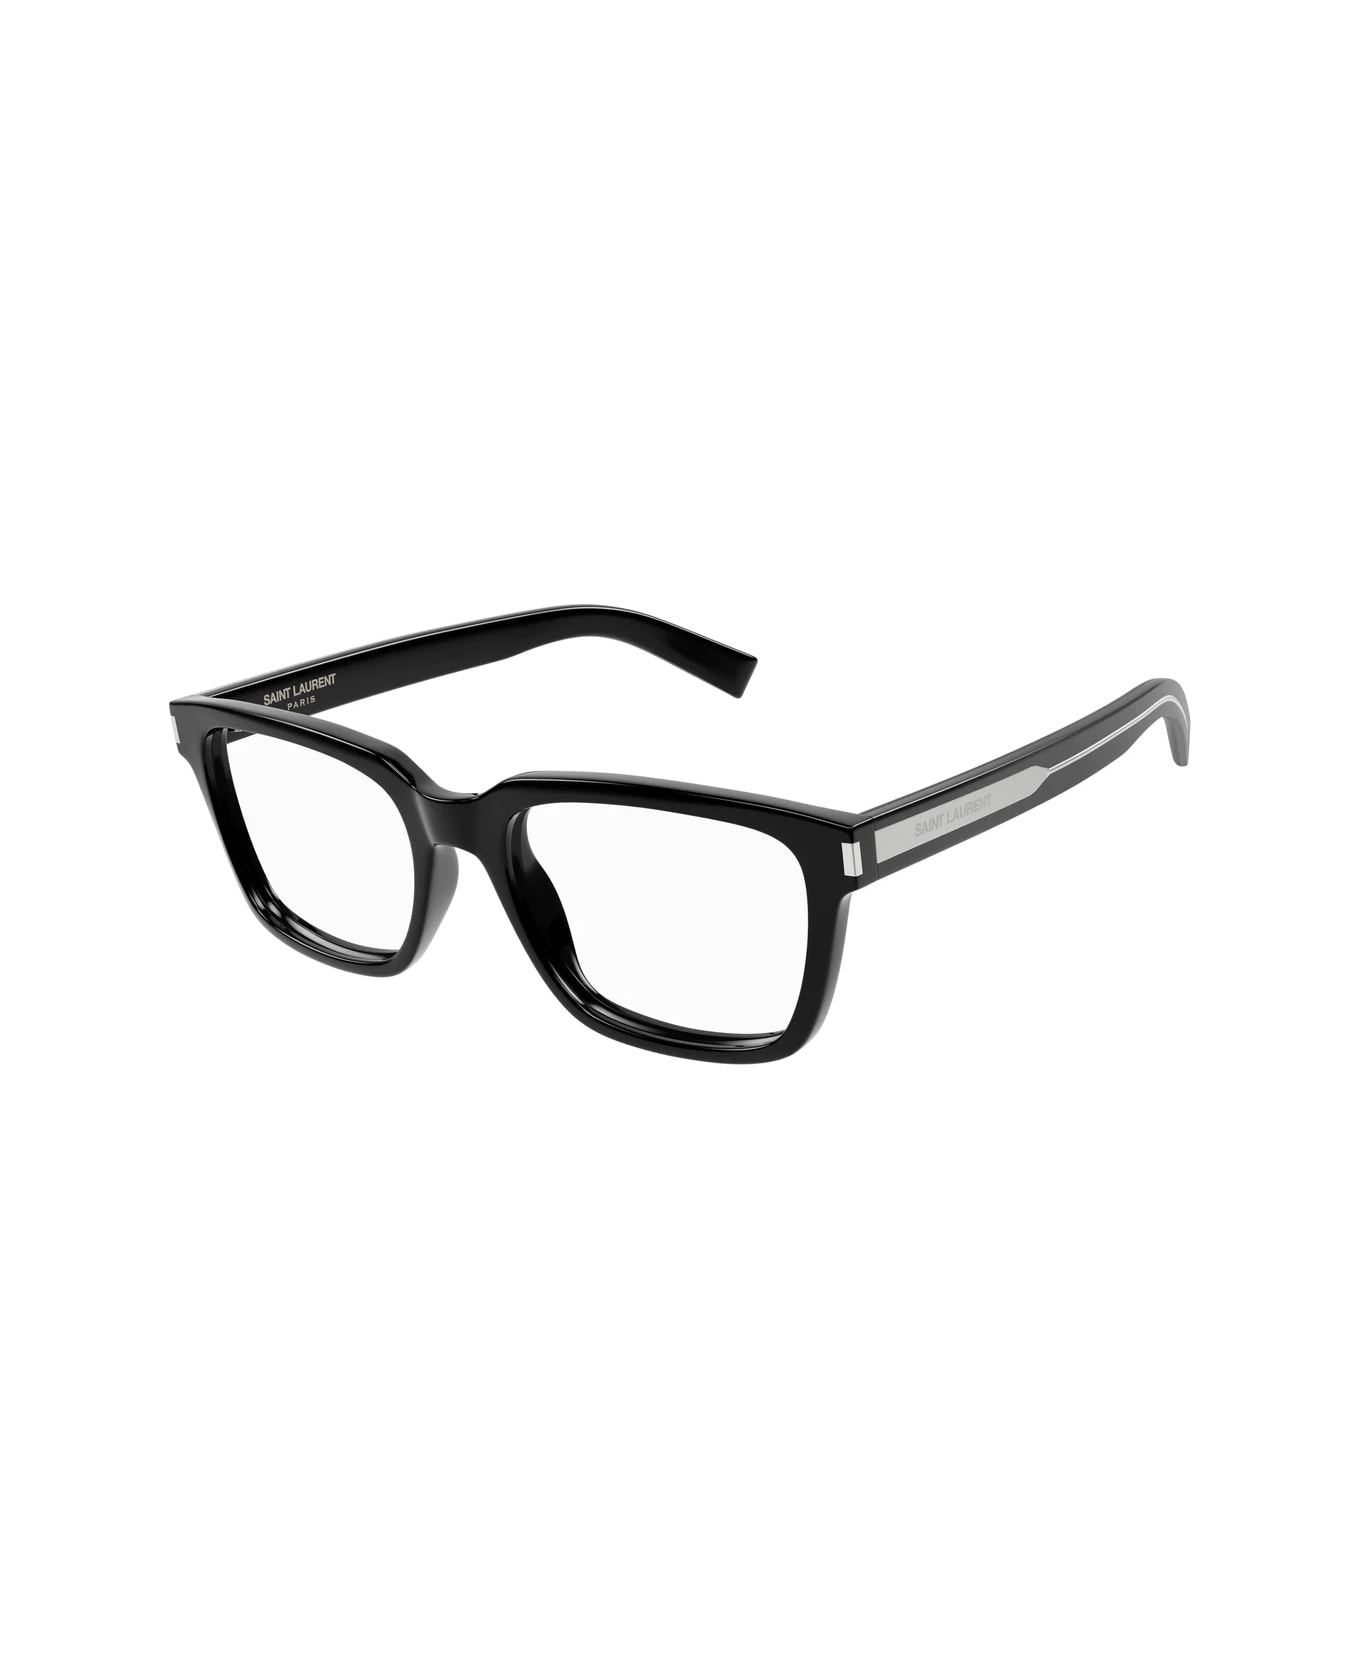 Saint Laurent Eyewear Sl 621 001 Glasses - Nero アイウェア